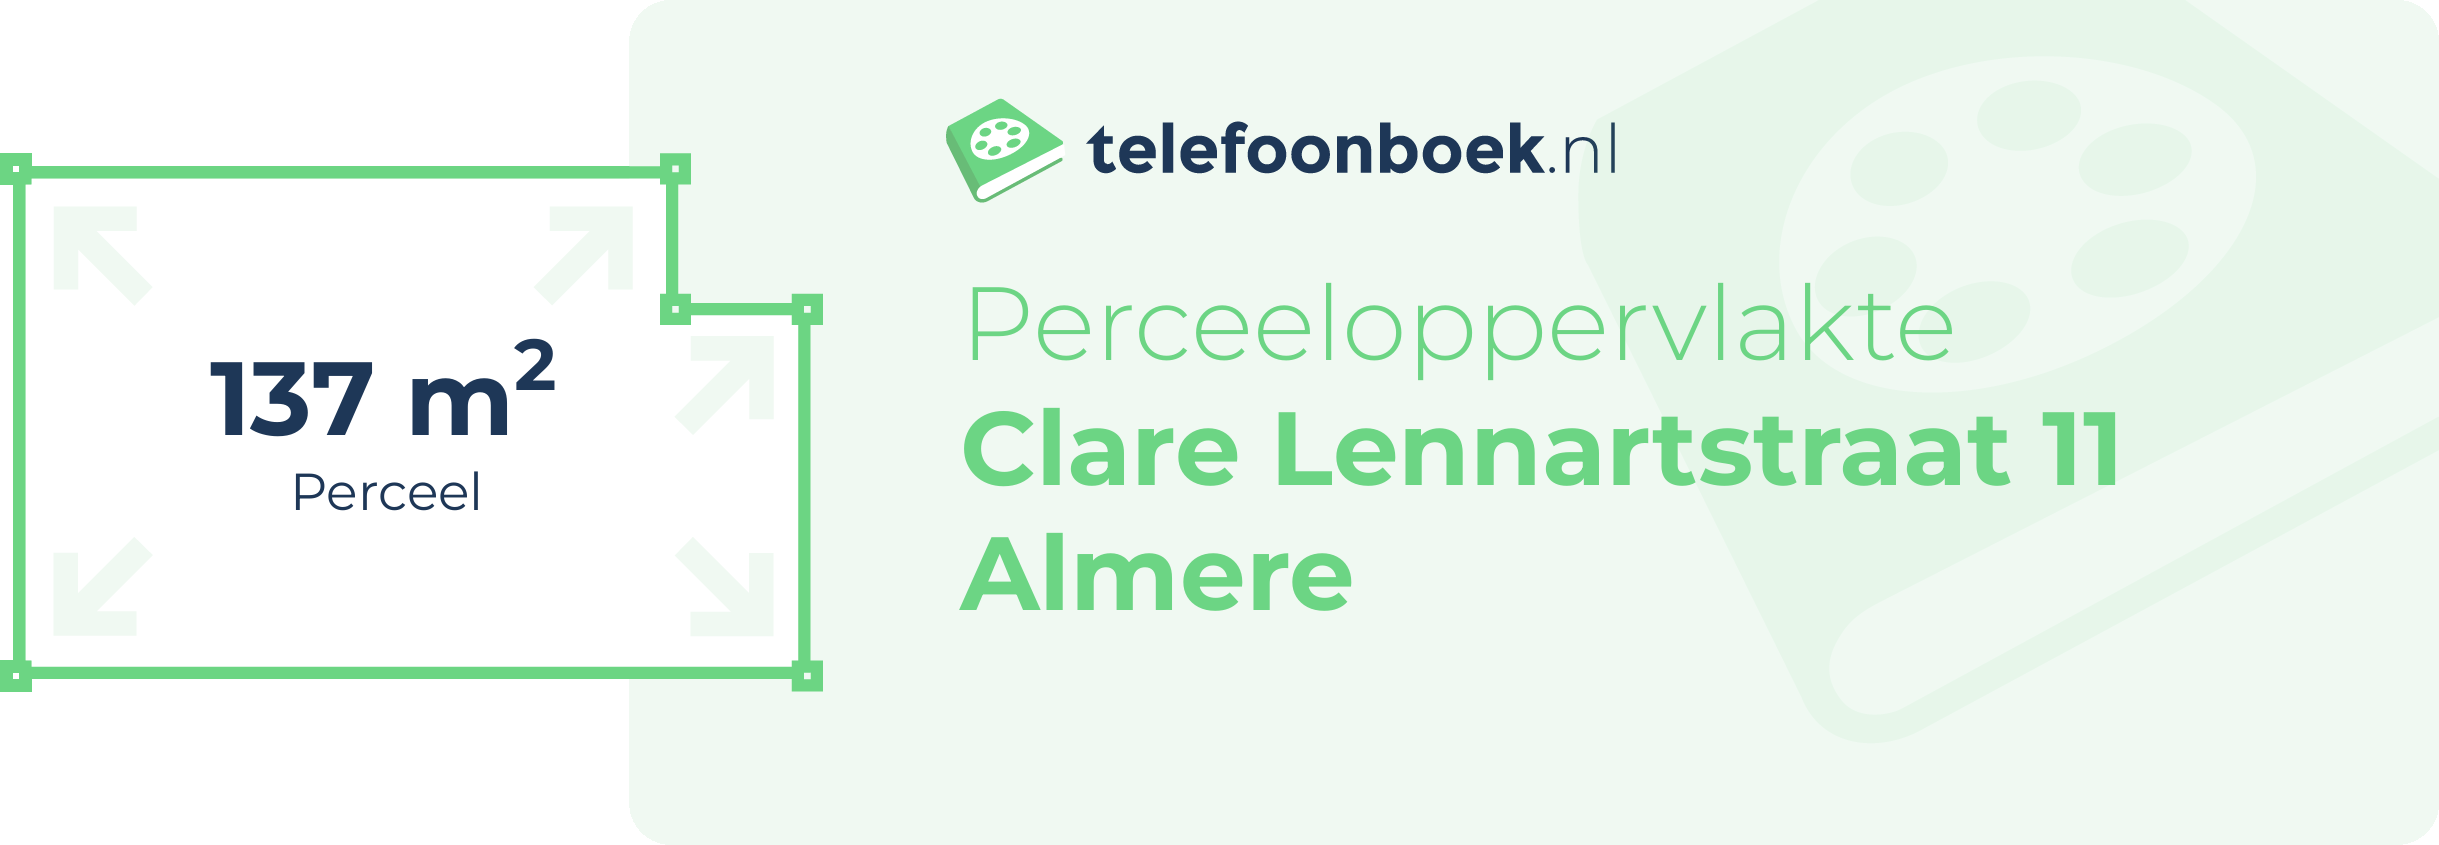 Perceeloppervlakte Clare Lennartstraat 11 Almere